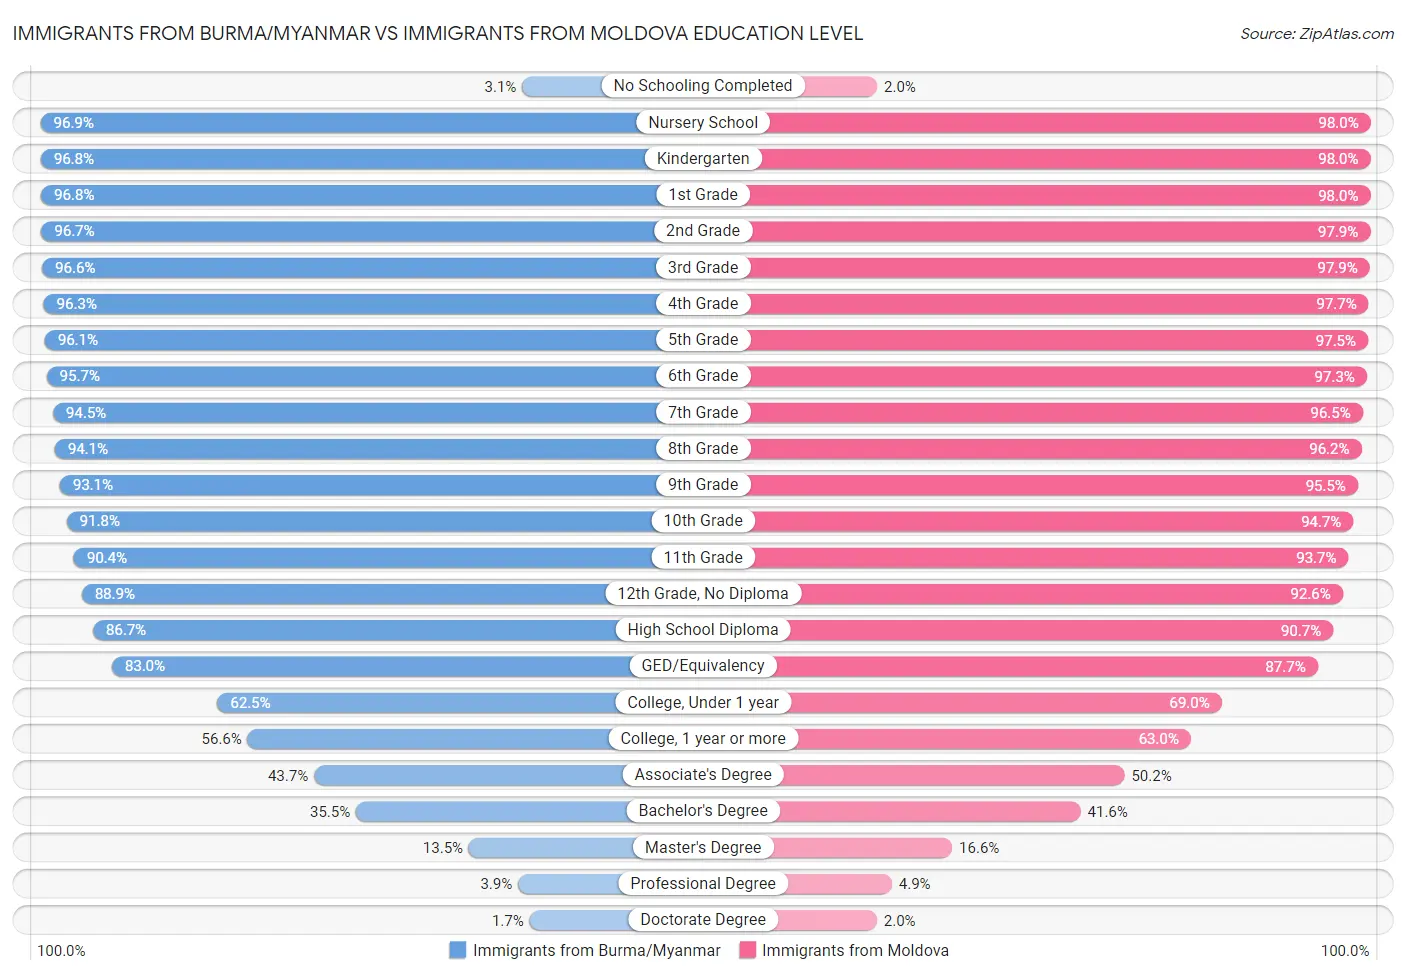 Immigrants from Burma/Myanmar vs Immigrants from Moldova Education Level